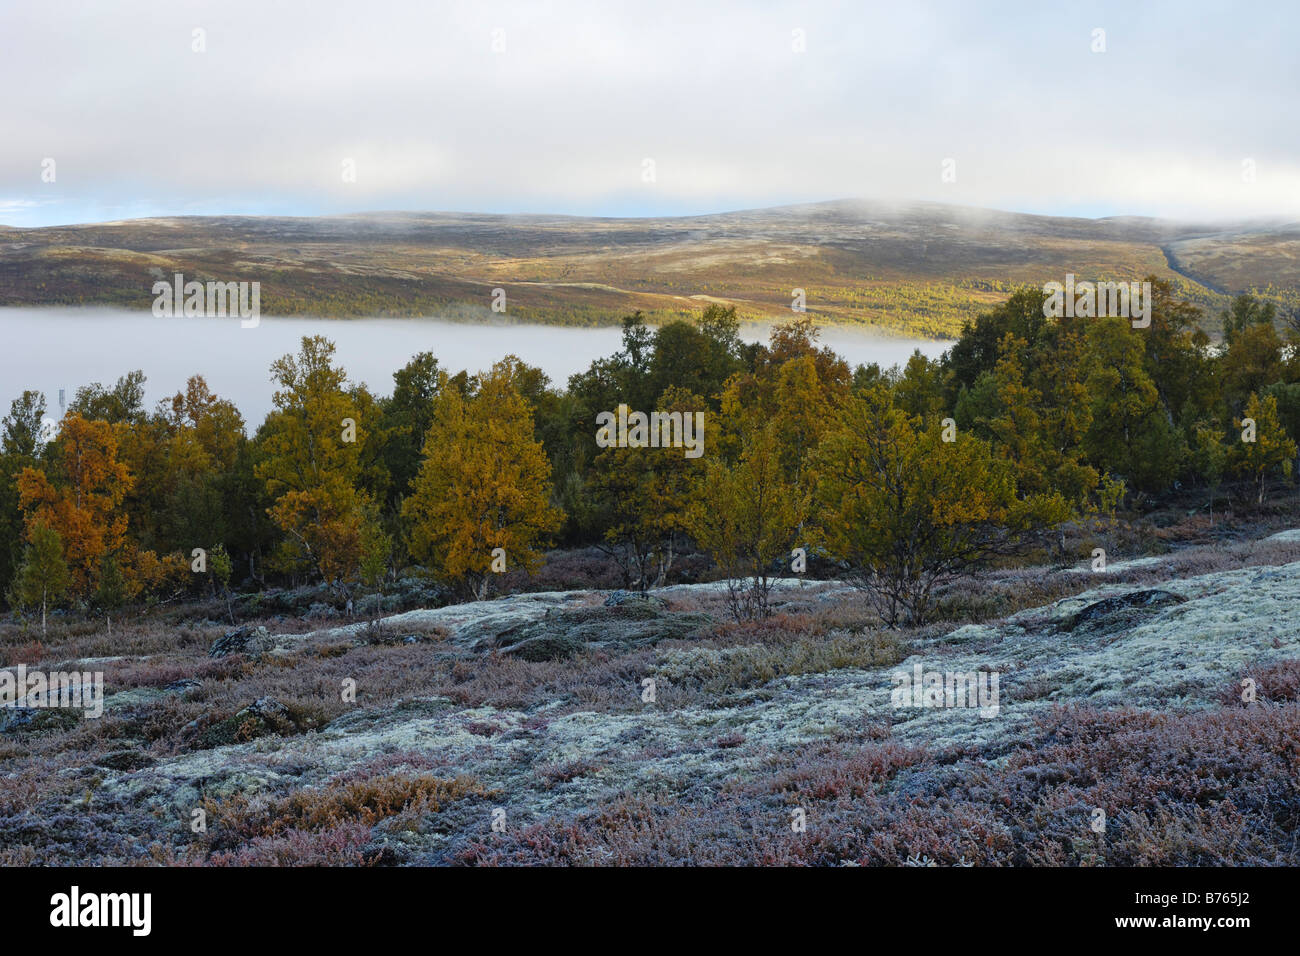 Montagna avsjoen nuvoloso alba mattina Oppland Norvegia nord europa autunno paesaggio paesaggio misty nebbia Foto Stock